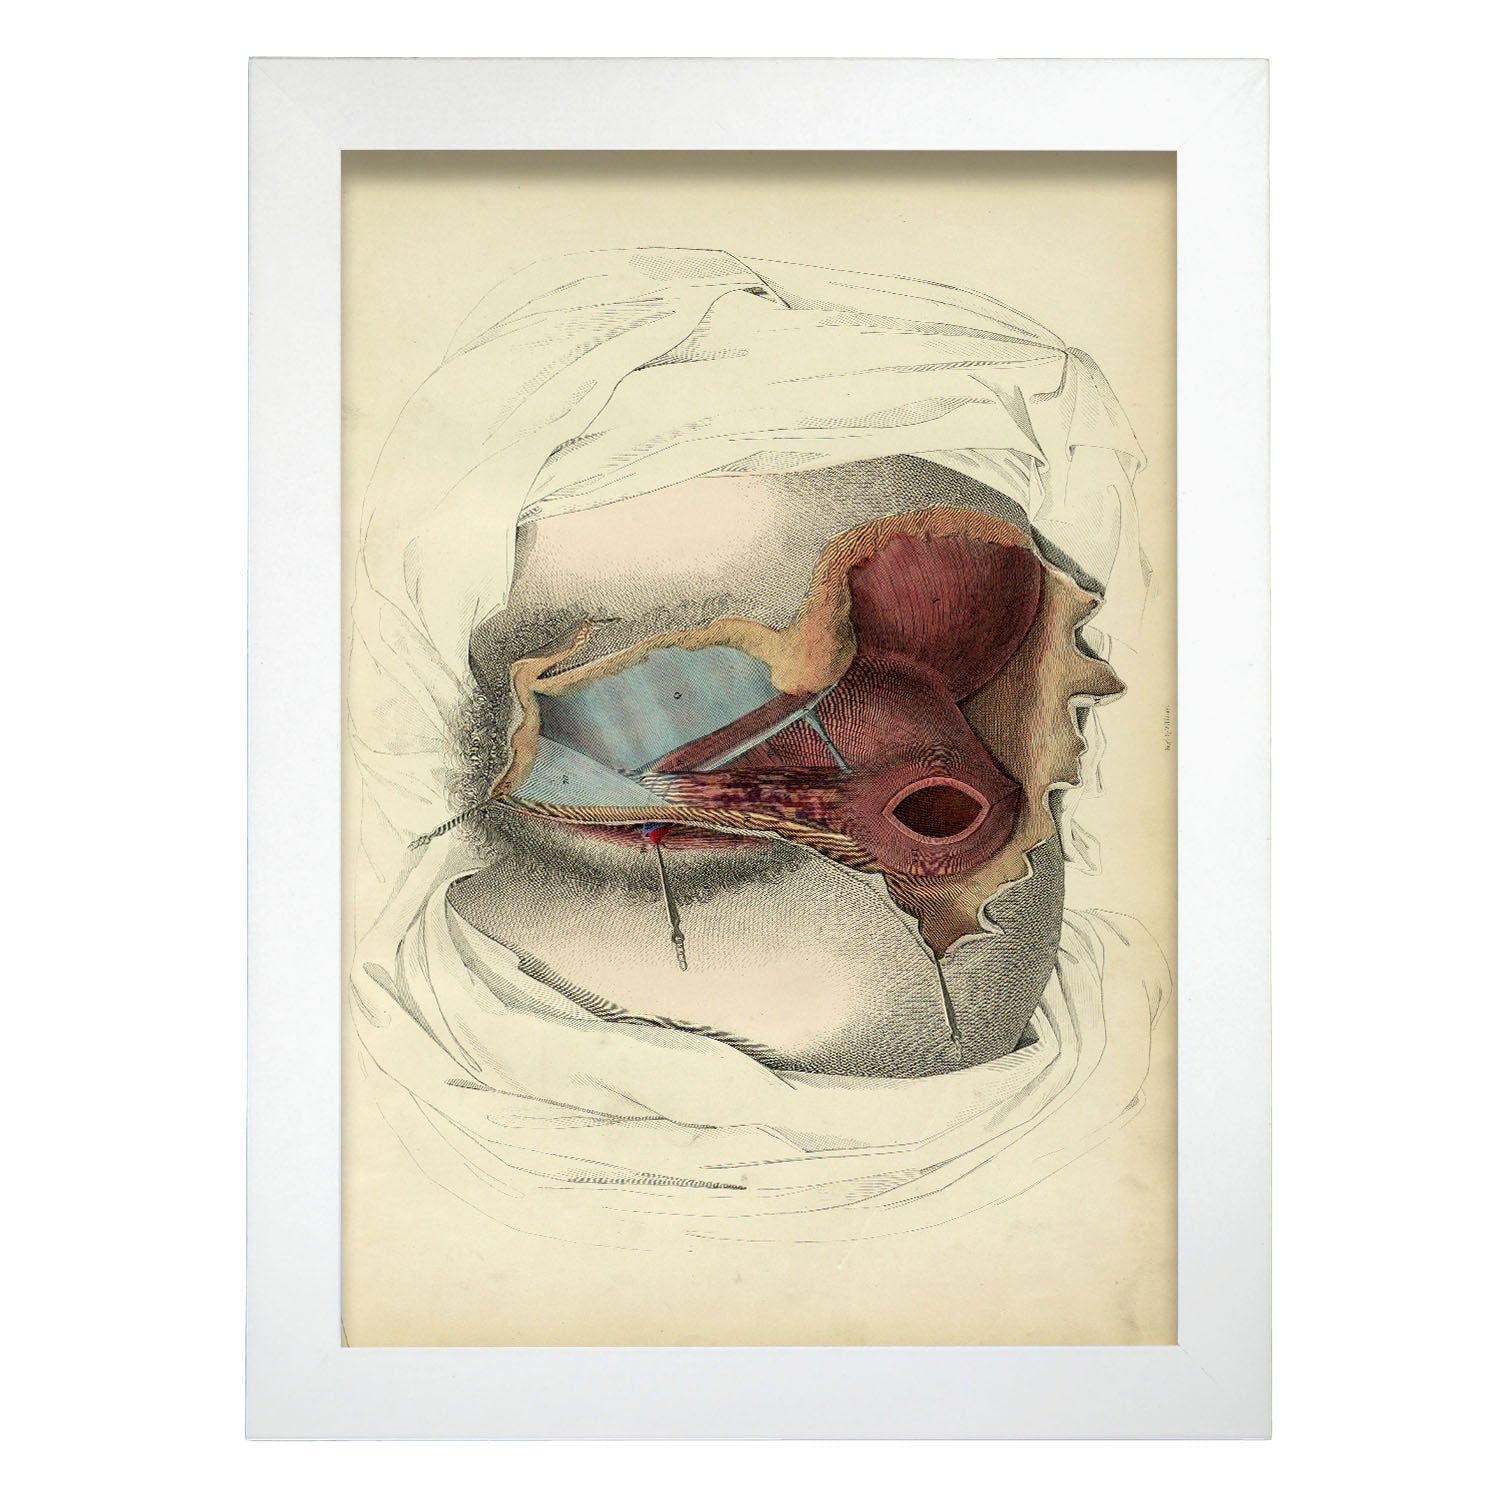 Dissection of the perineum, female-Artwork-Nacnic-A4-Marco Blanco-Nacnic Estudio SL